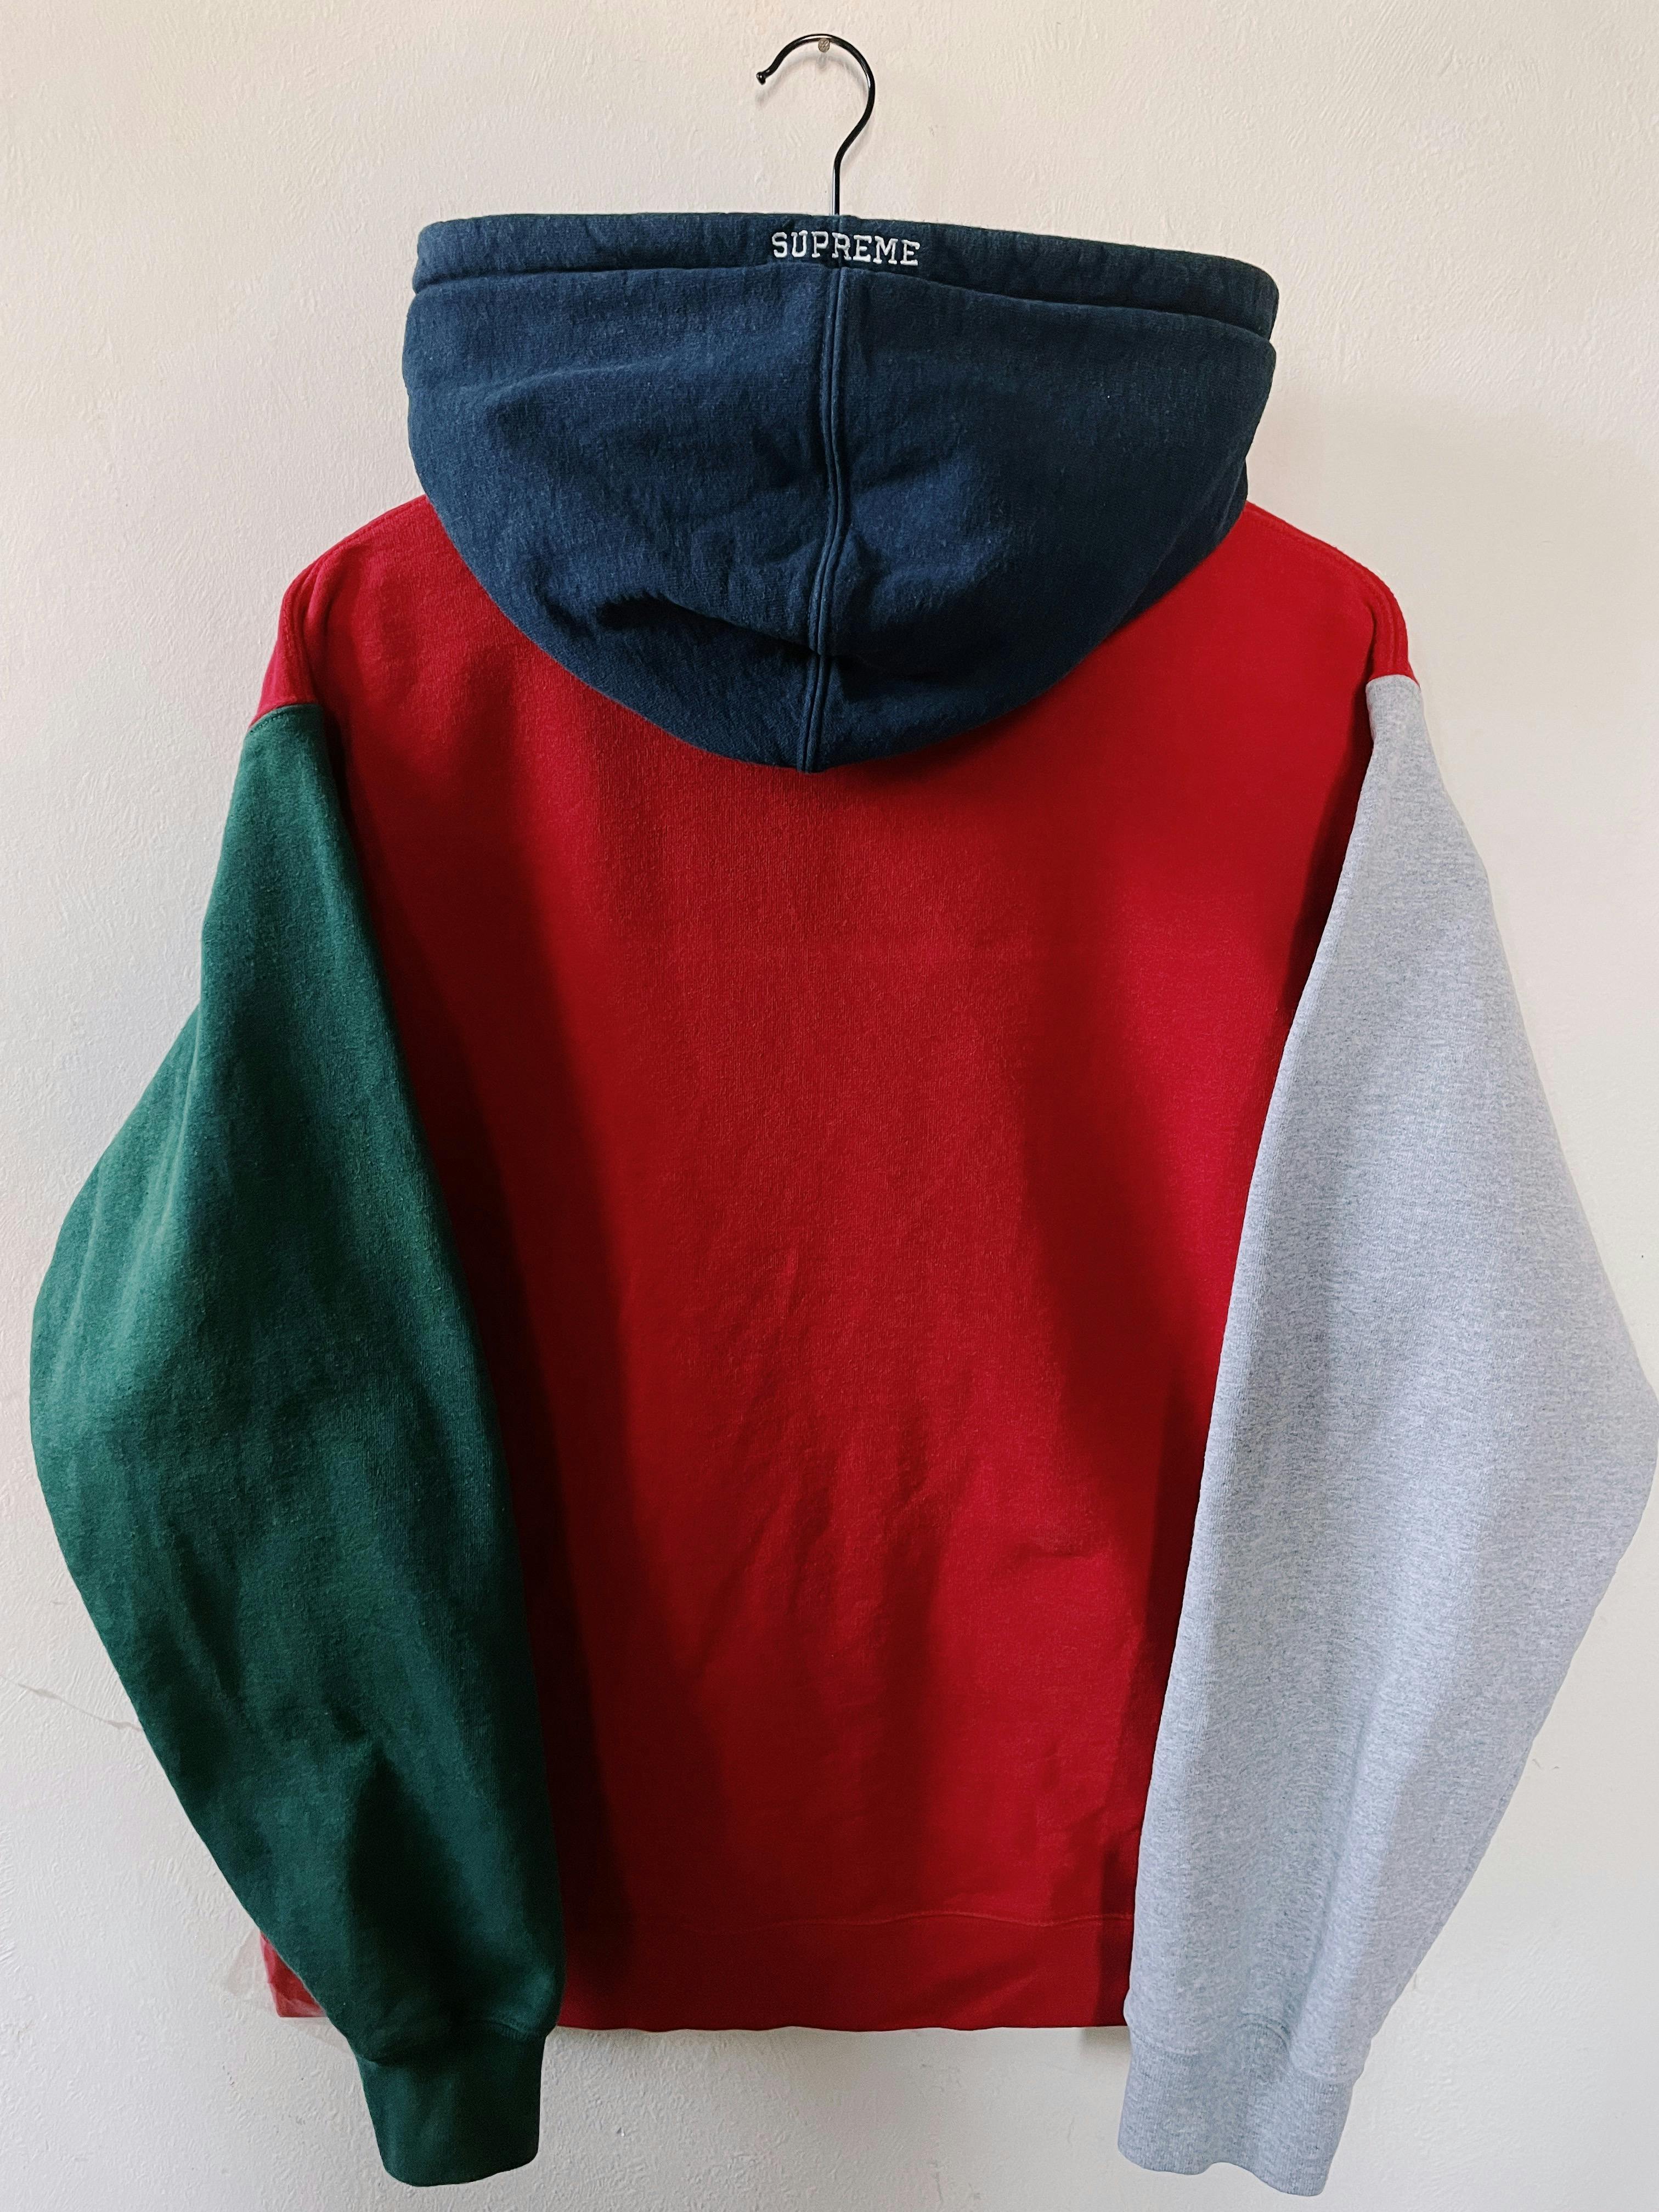 Supreme S Logo Colorblocked Hoodie Grey / Red / Green / Navy - 2